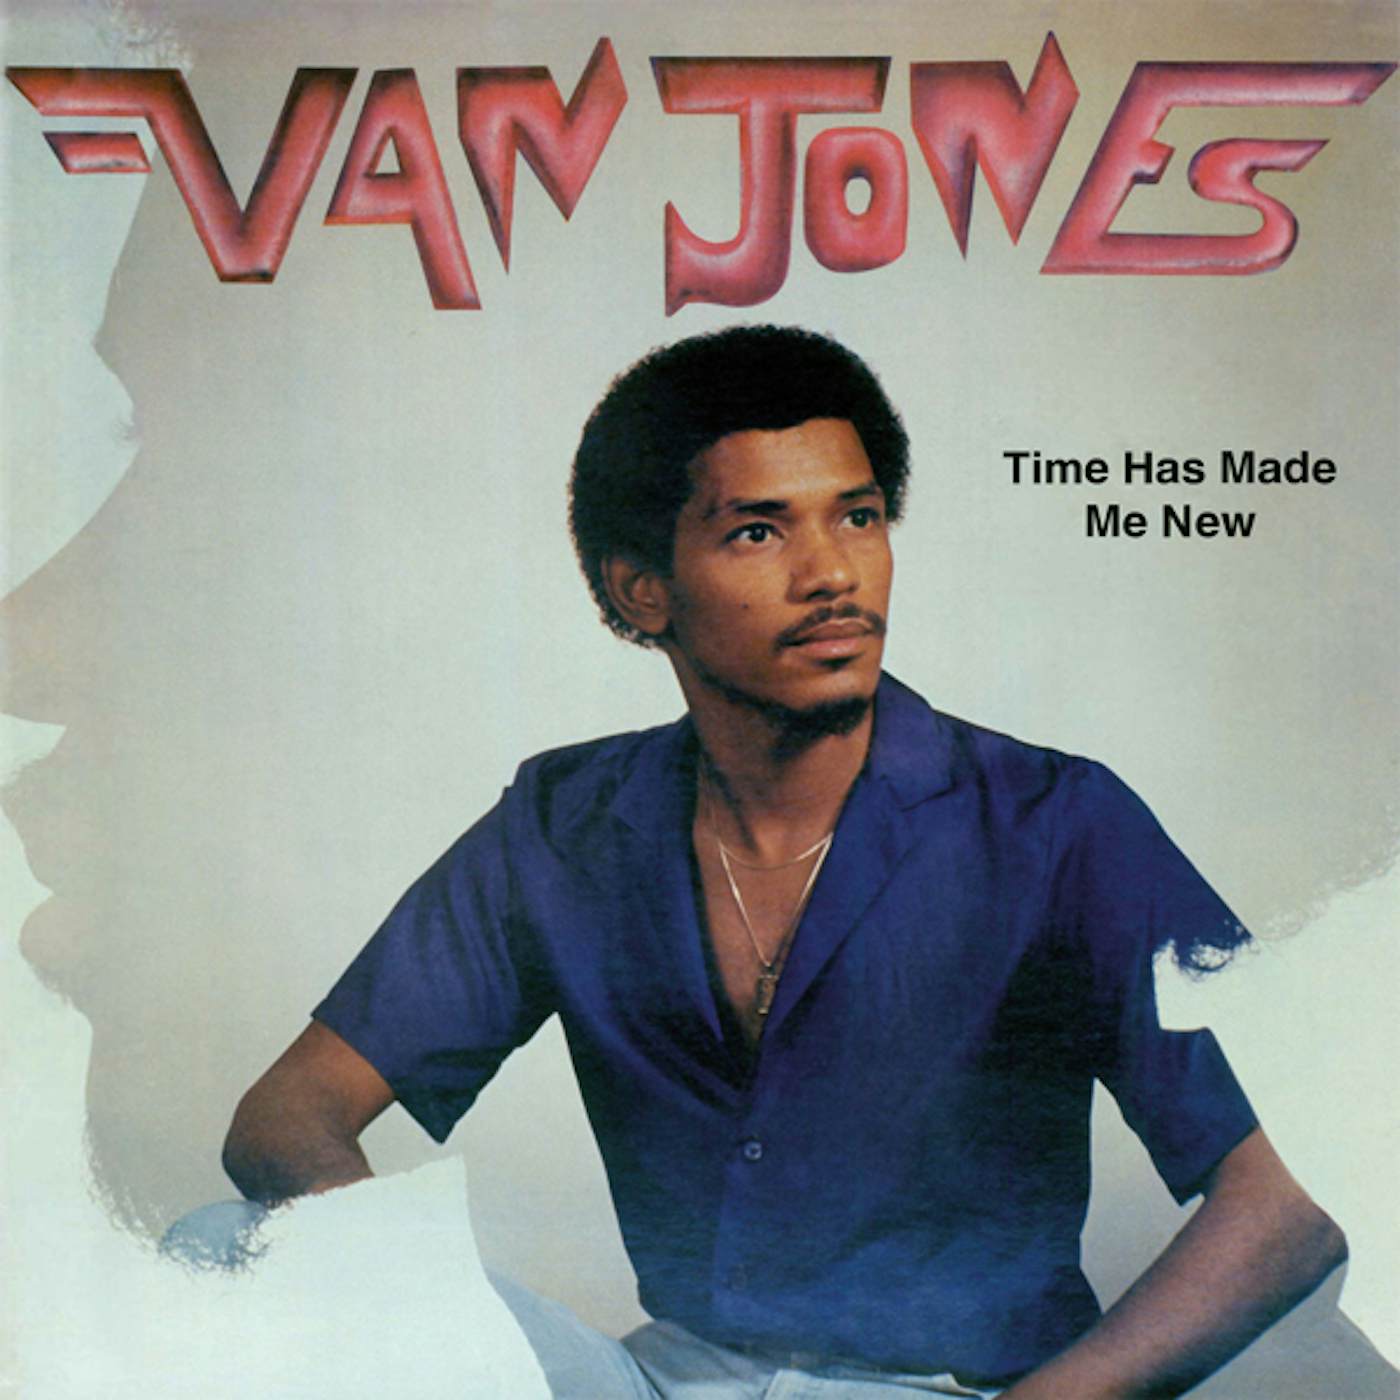 Van Jones Time Has Made Me New Vinyl Record